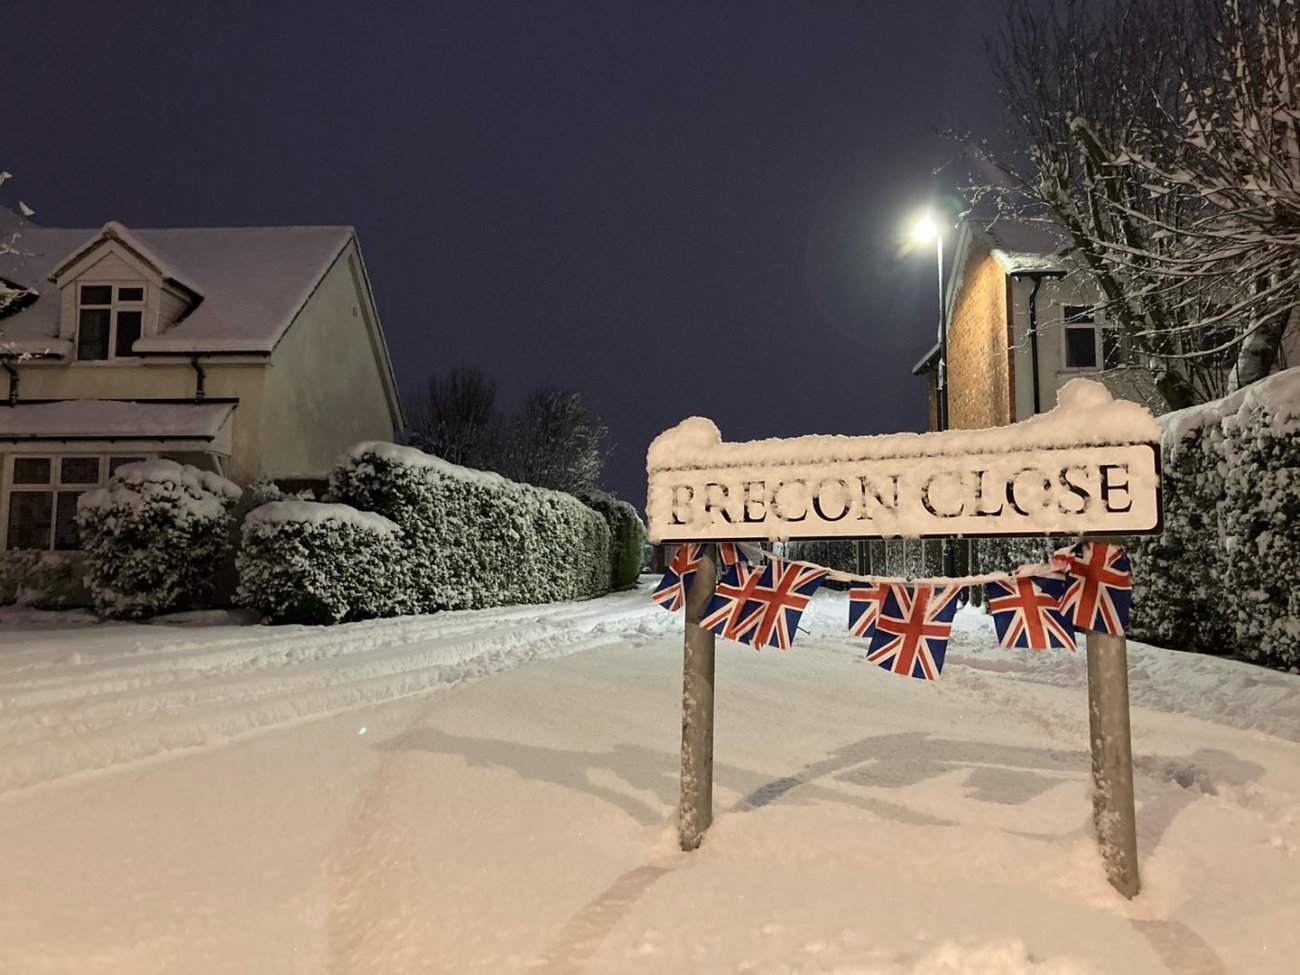 Photograph of Snowy Spondon Nights - Breacon Close